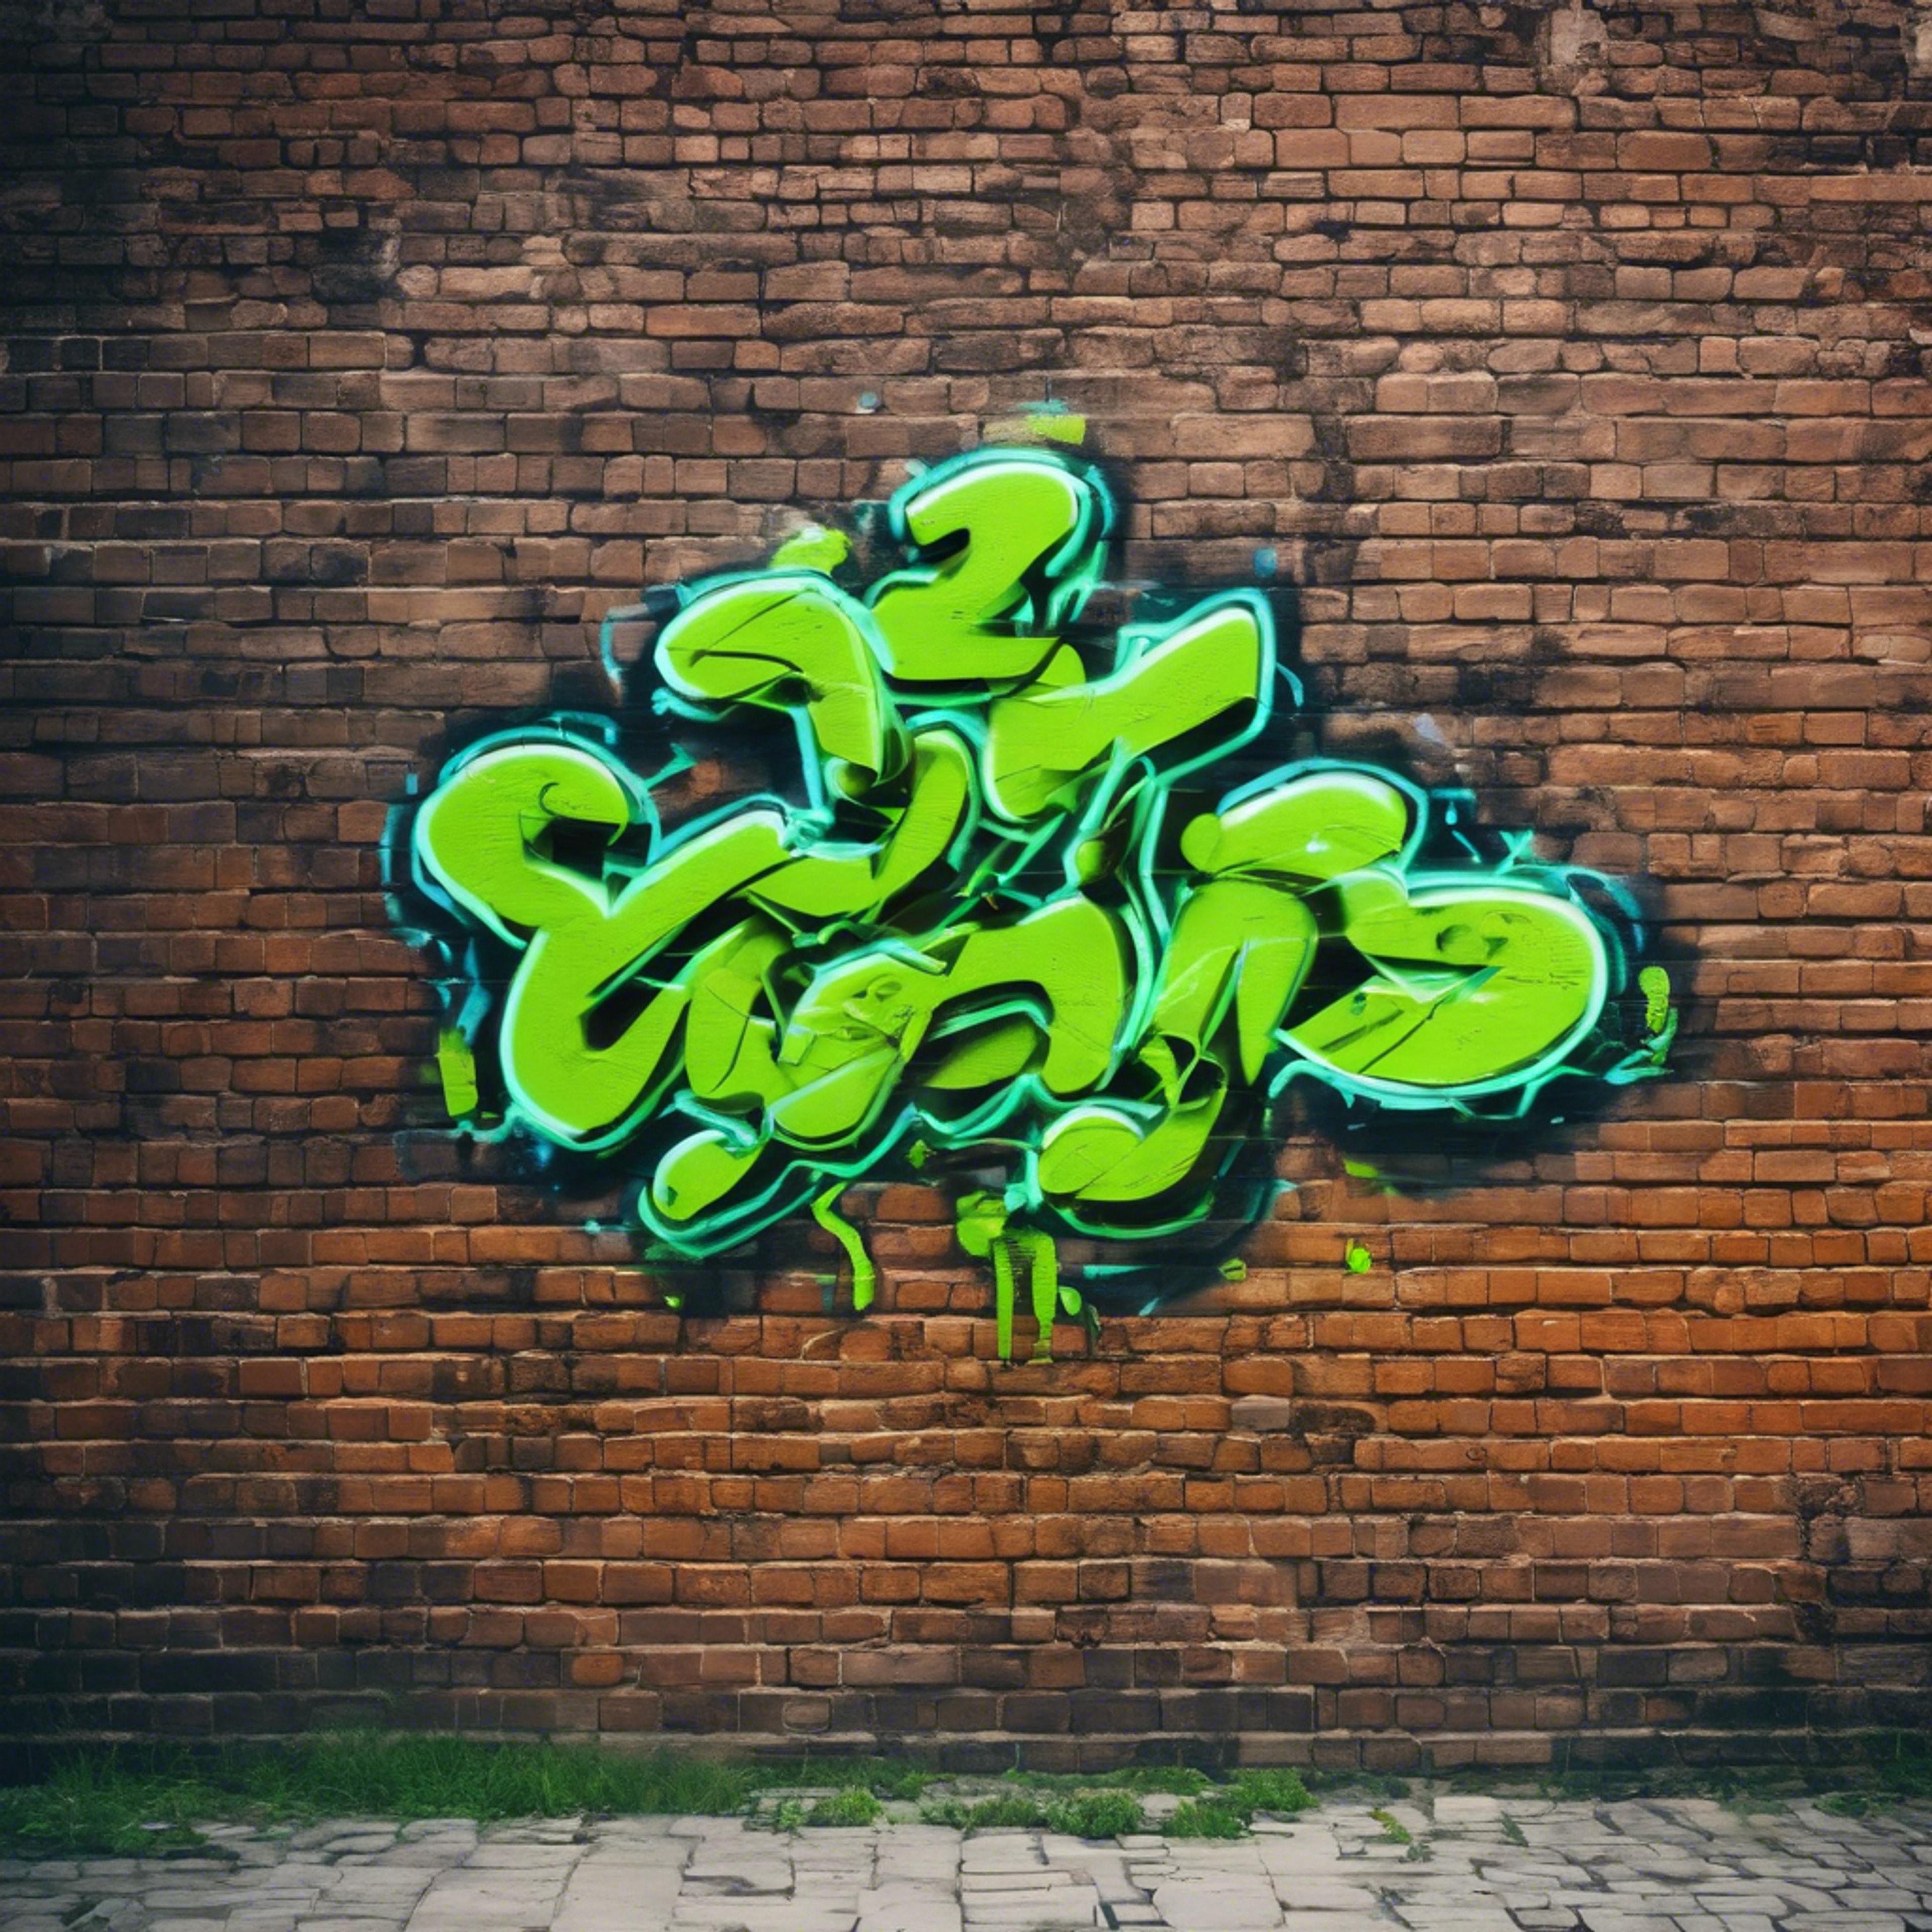 Cool neon green graffiti on an old brick wall in an urban setting. Hintergrund[8032604dbabf4a1691c6]